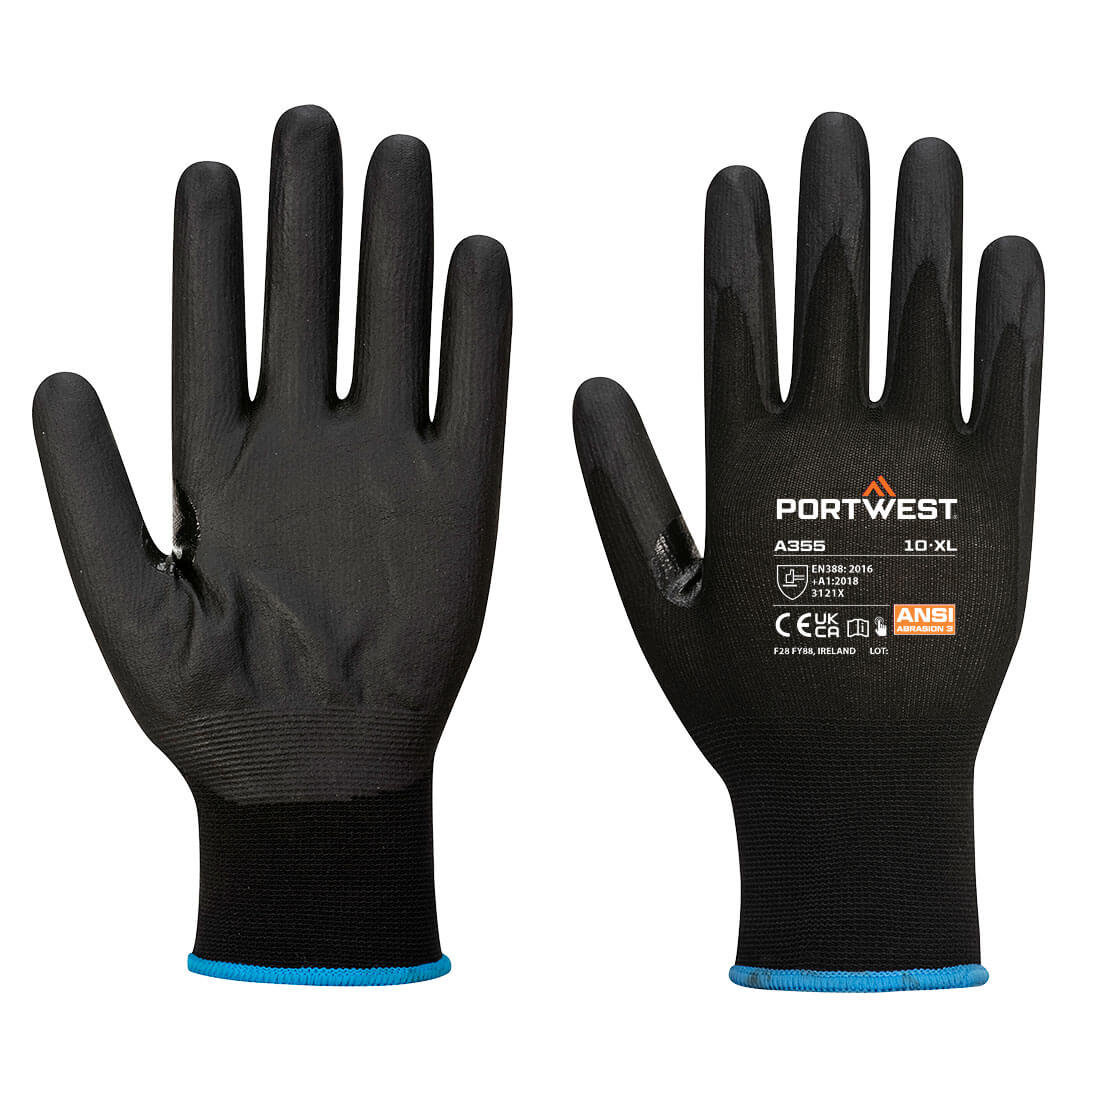 HAND PROTECTION, General Handling Gloves